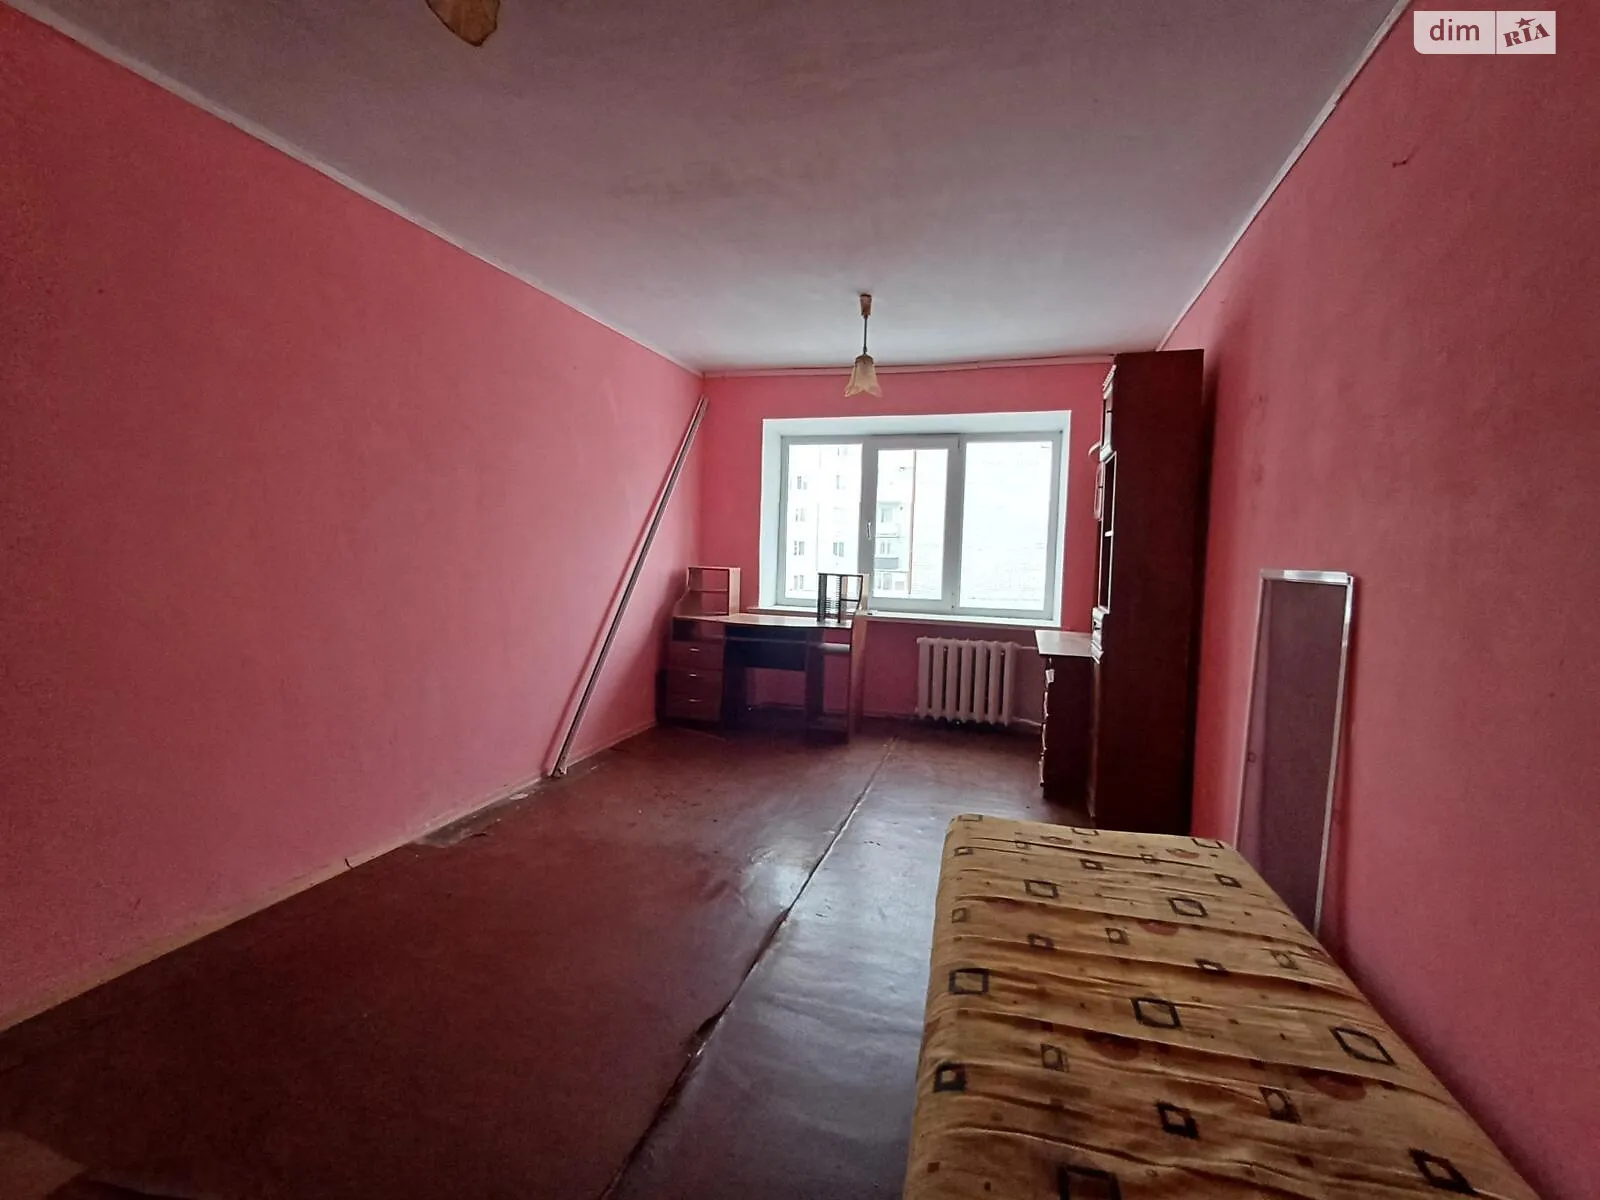 Продается комната 17 кв. м в Тернополе, цена: 9000 $